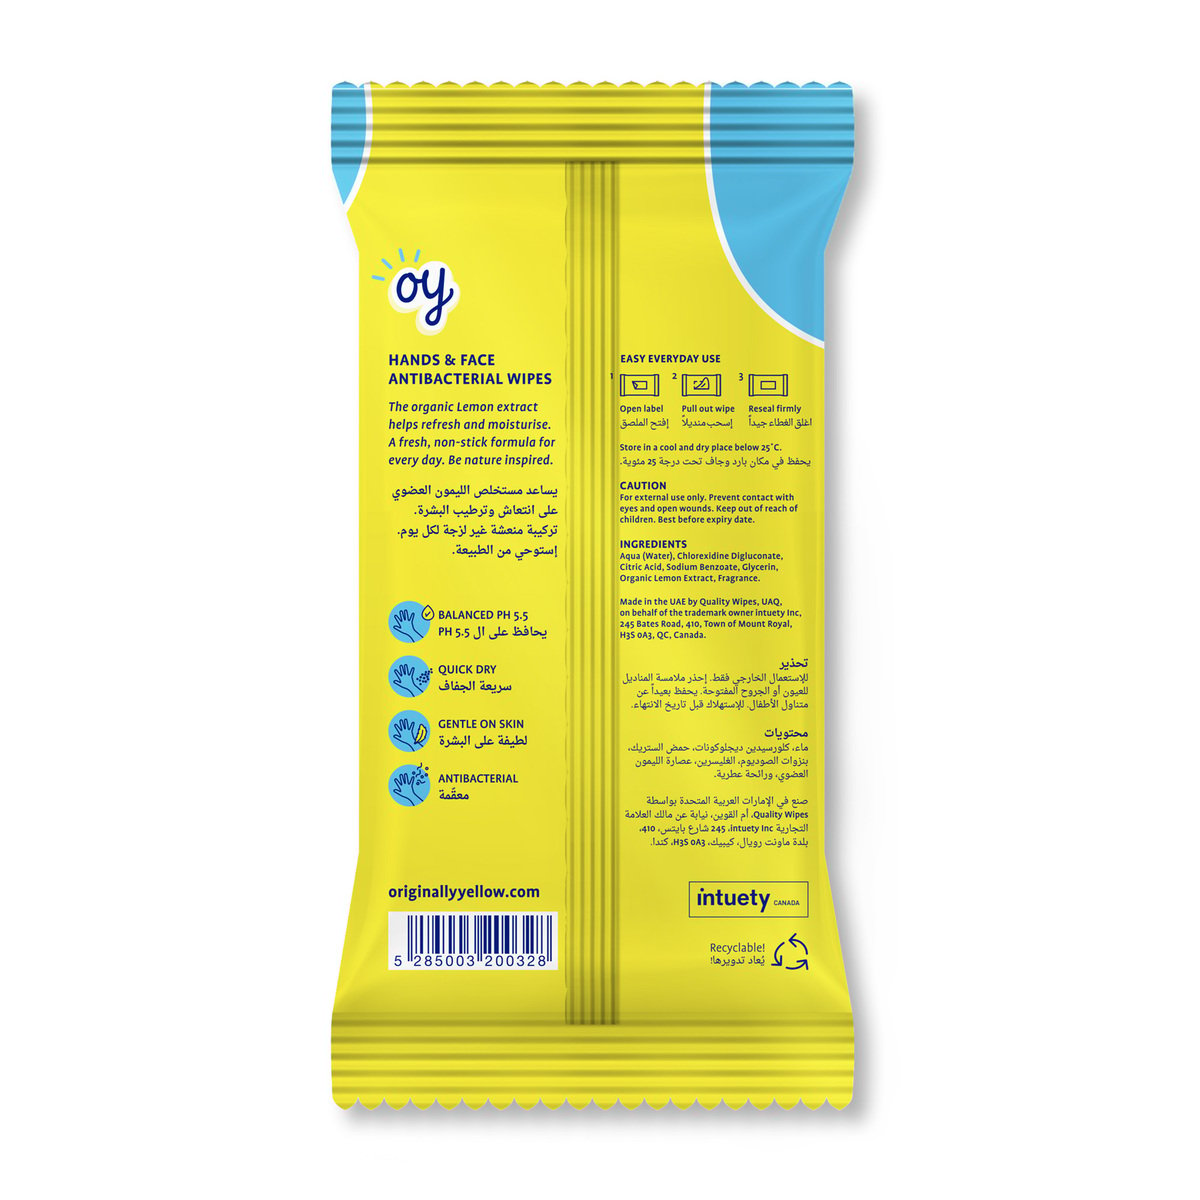 Originally Yellow Hands And Face Antibacterial Wipes Organic Lemon Extract 10pcs